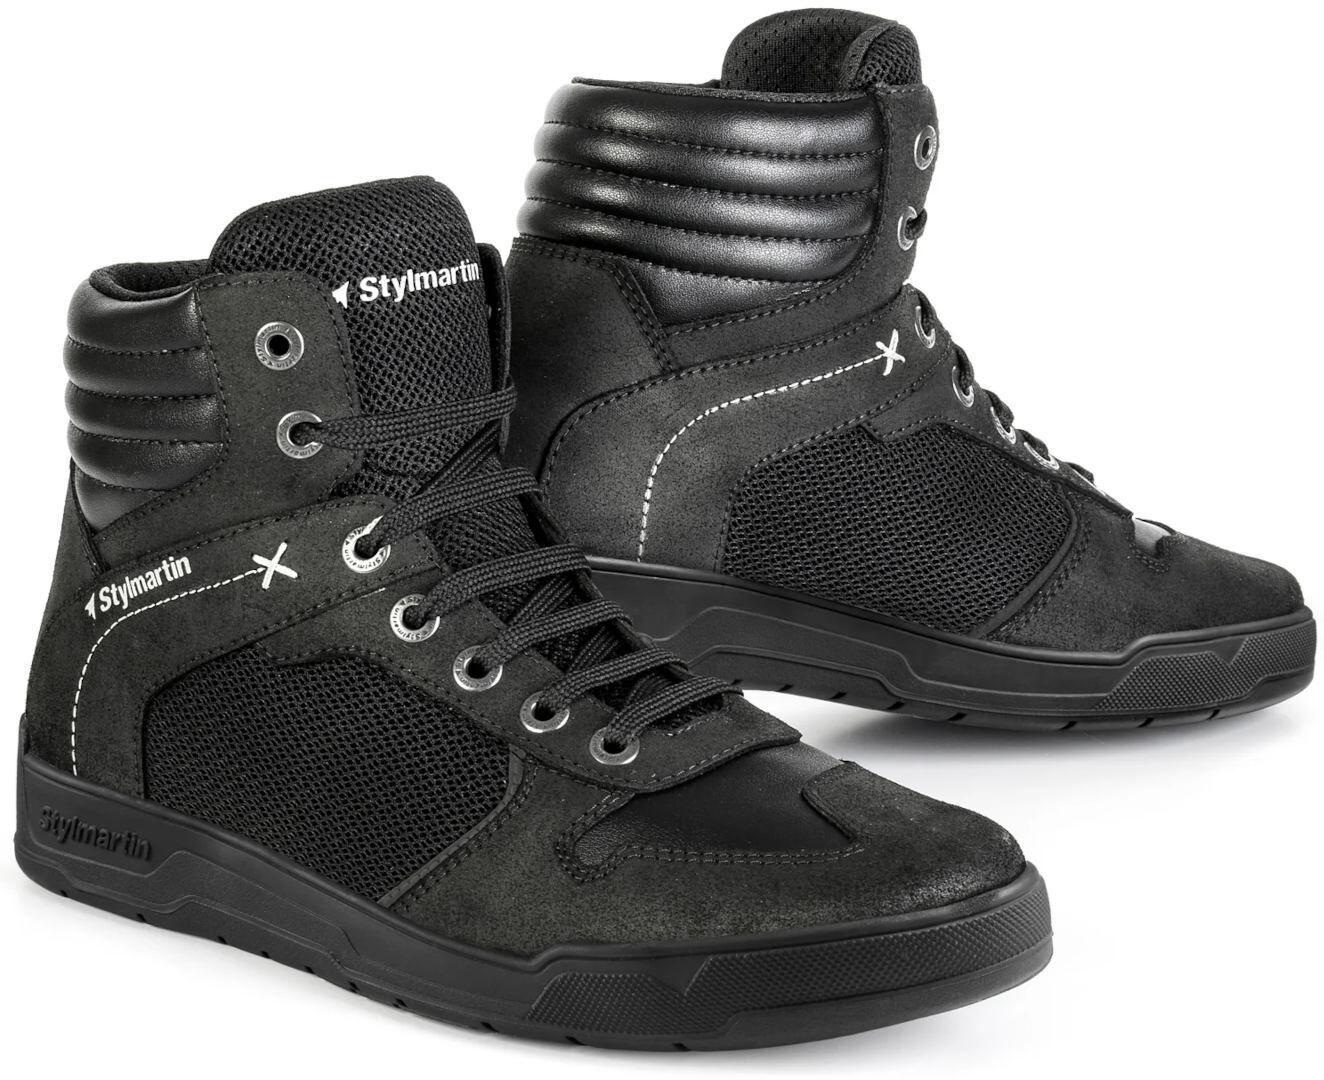 Stylmartin Atom Evo Zapatos de moto - Negro (44)